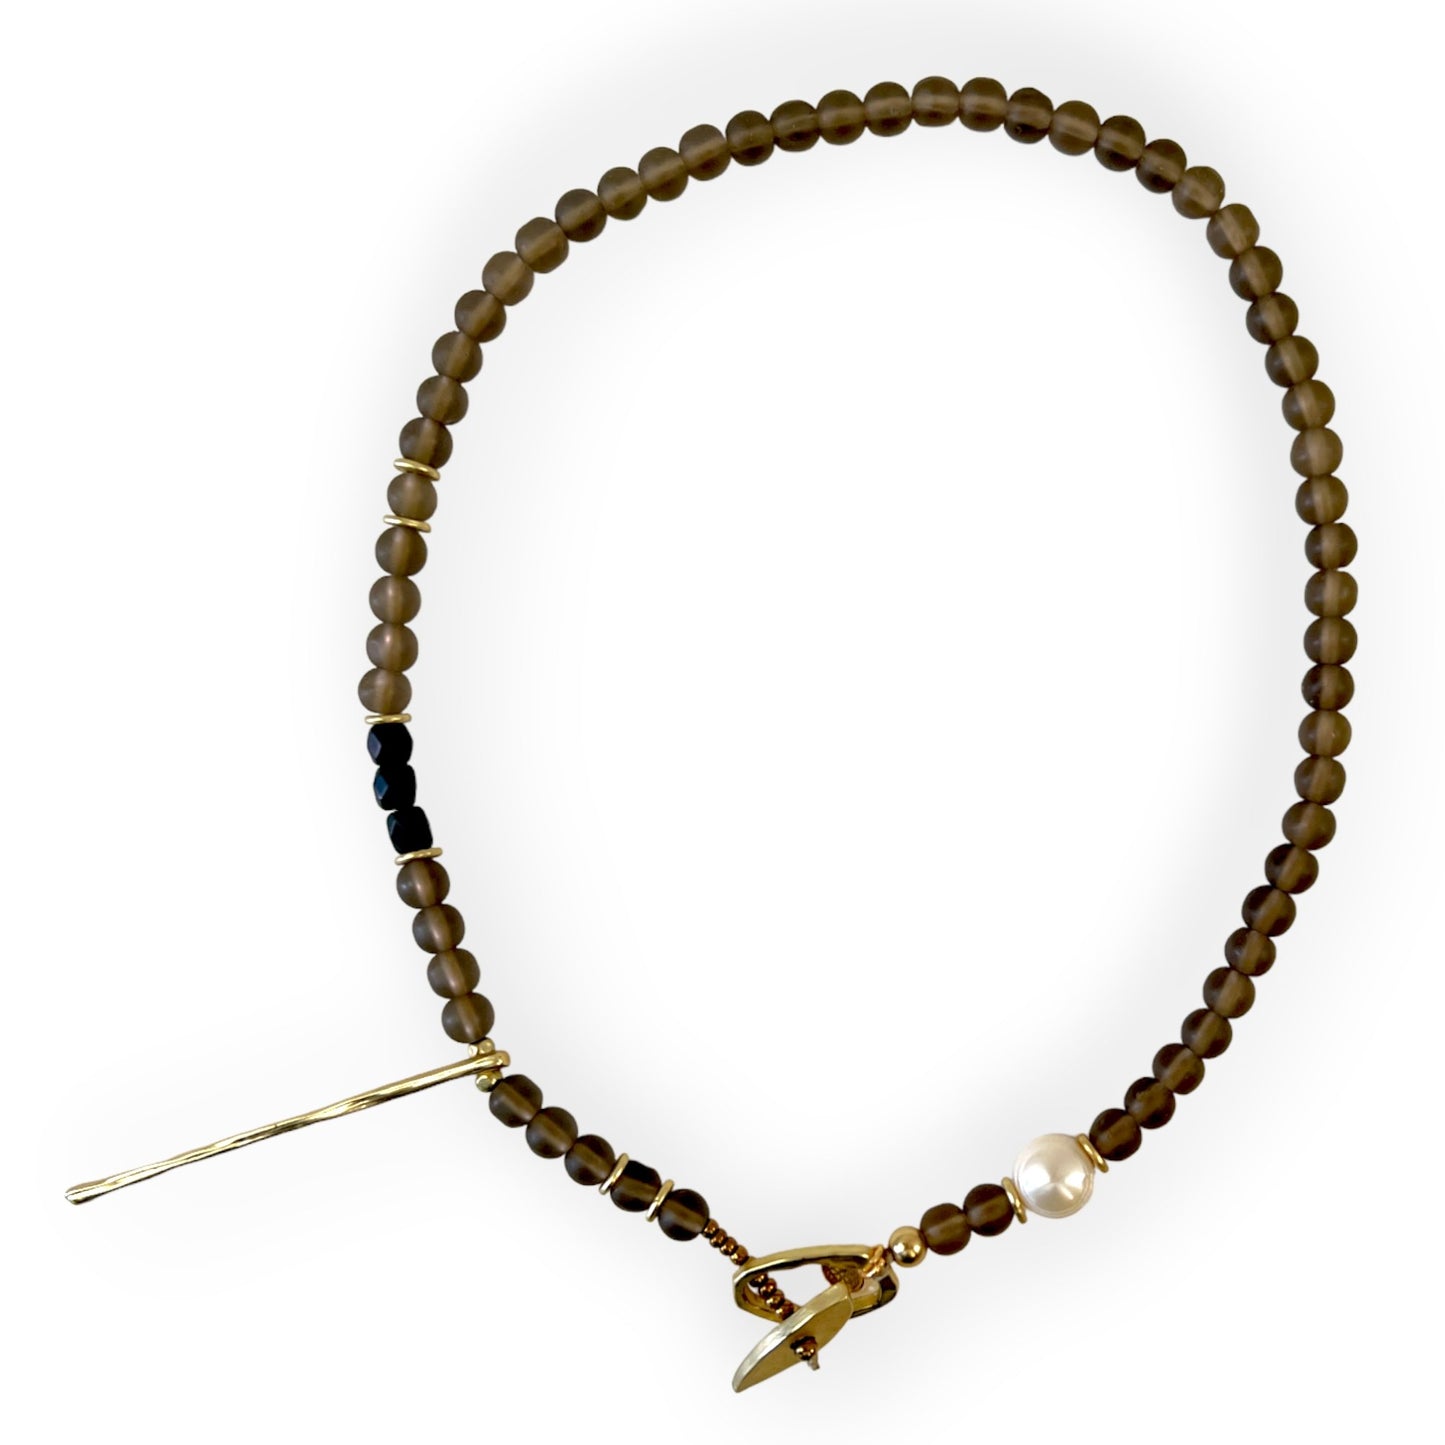 Smokey quartz beaded necklace with black chalcedony, pearl and brass aSundara Joon